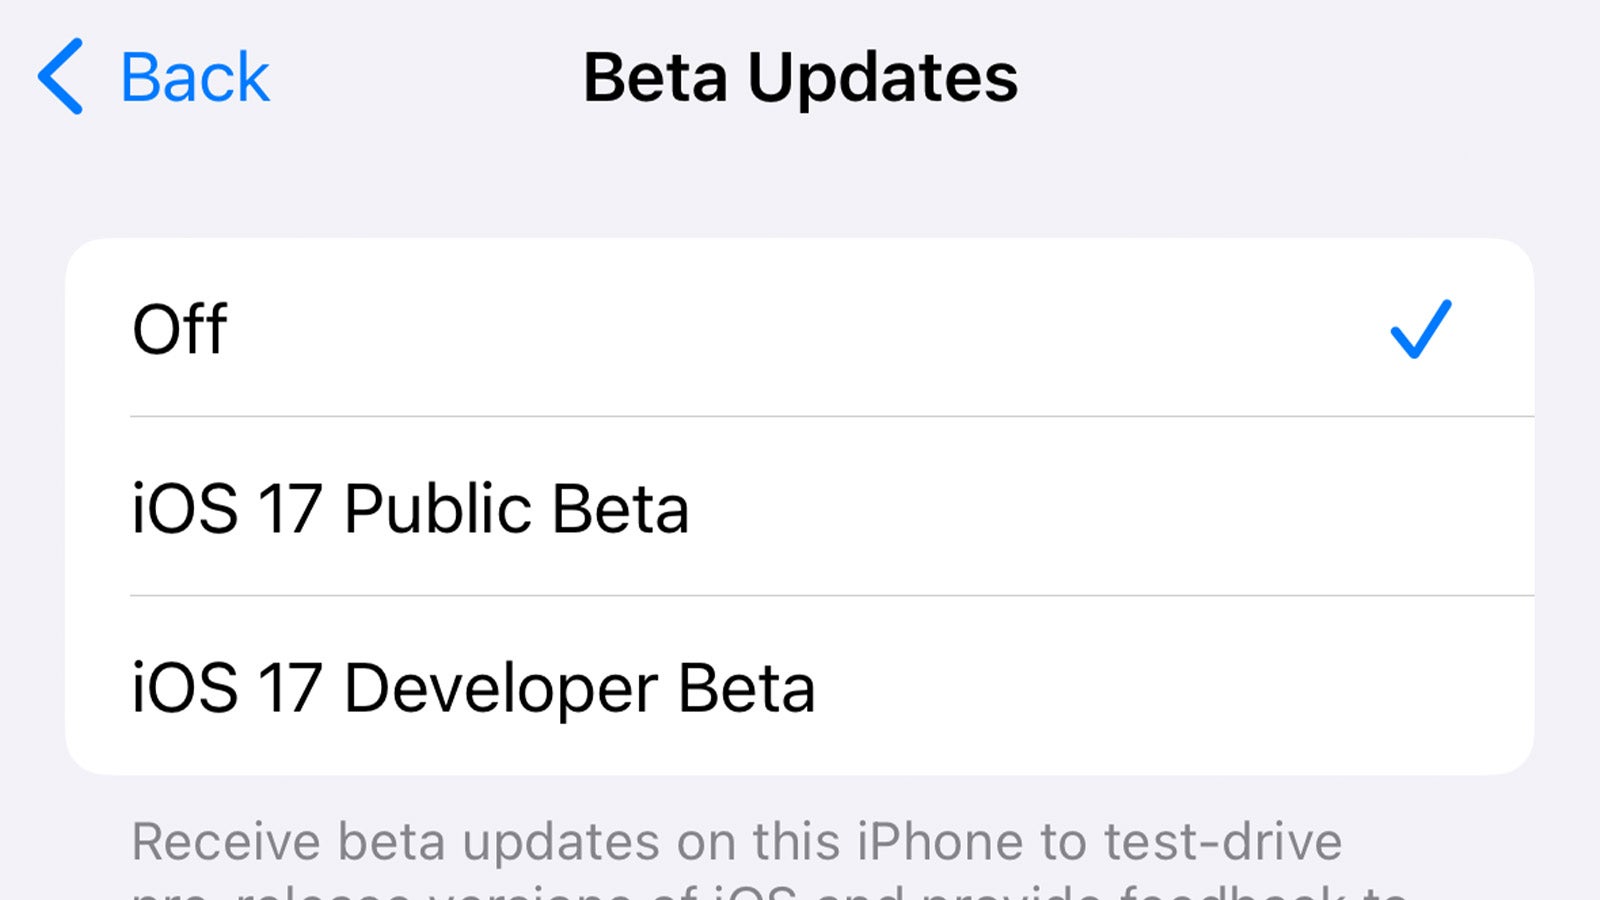 Beta Updates menu in iOS 17